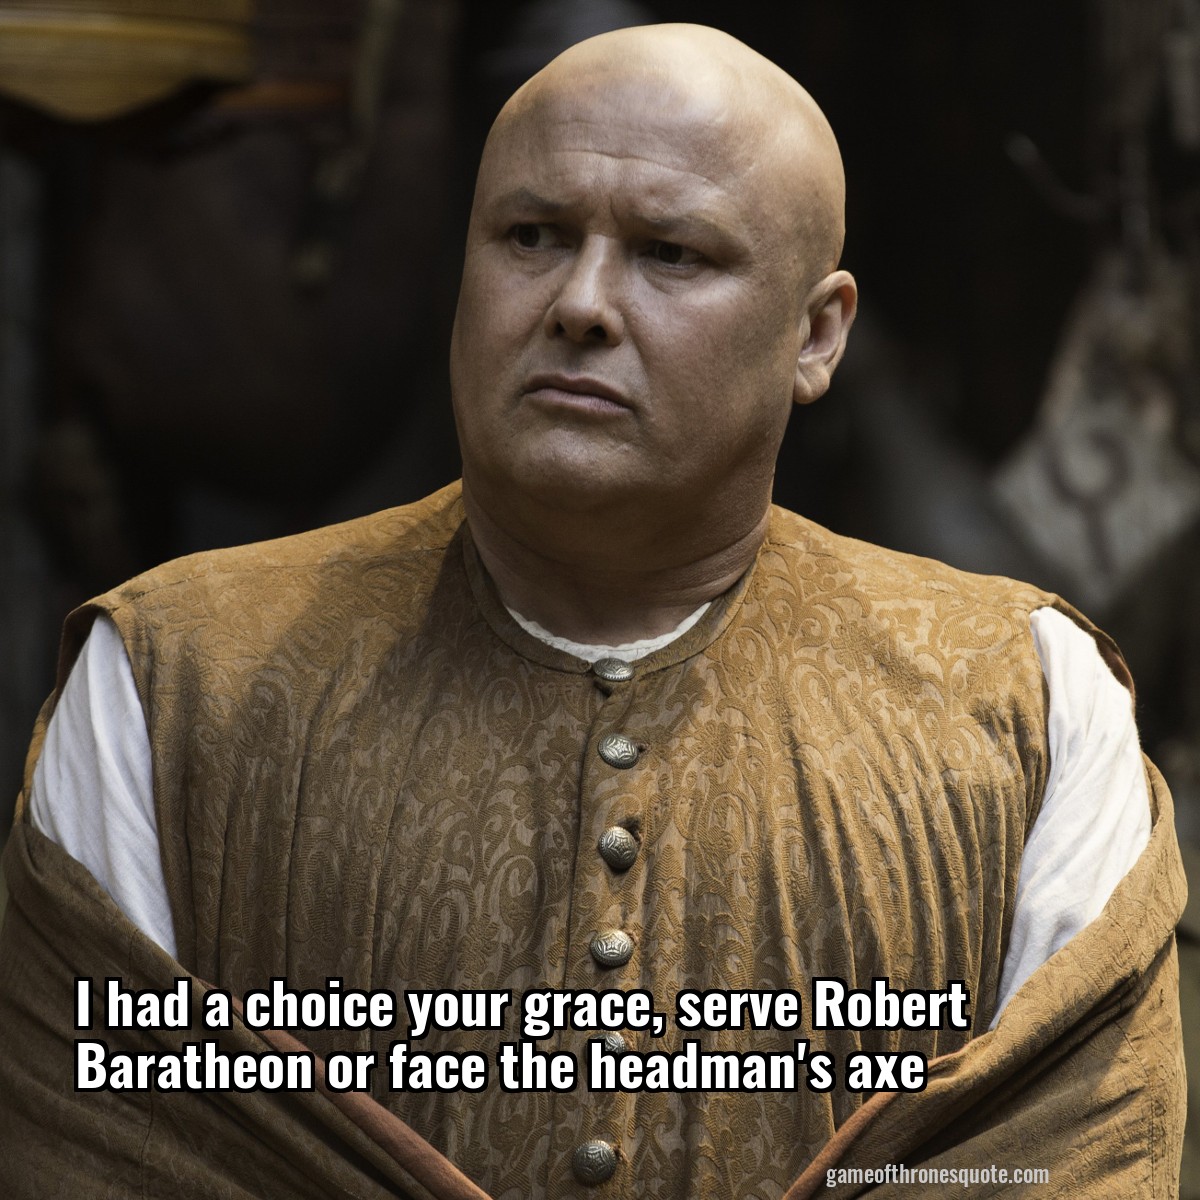 I had a choice your grace, serve Robert Baratheon or face the headman's axe